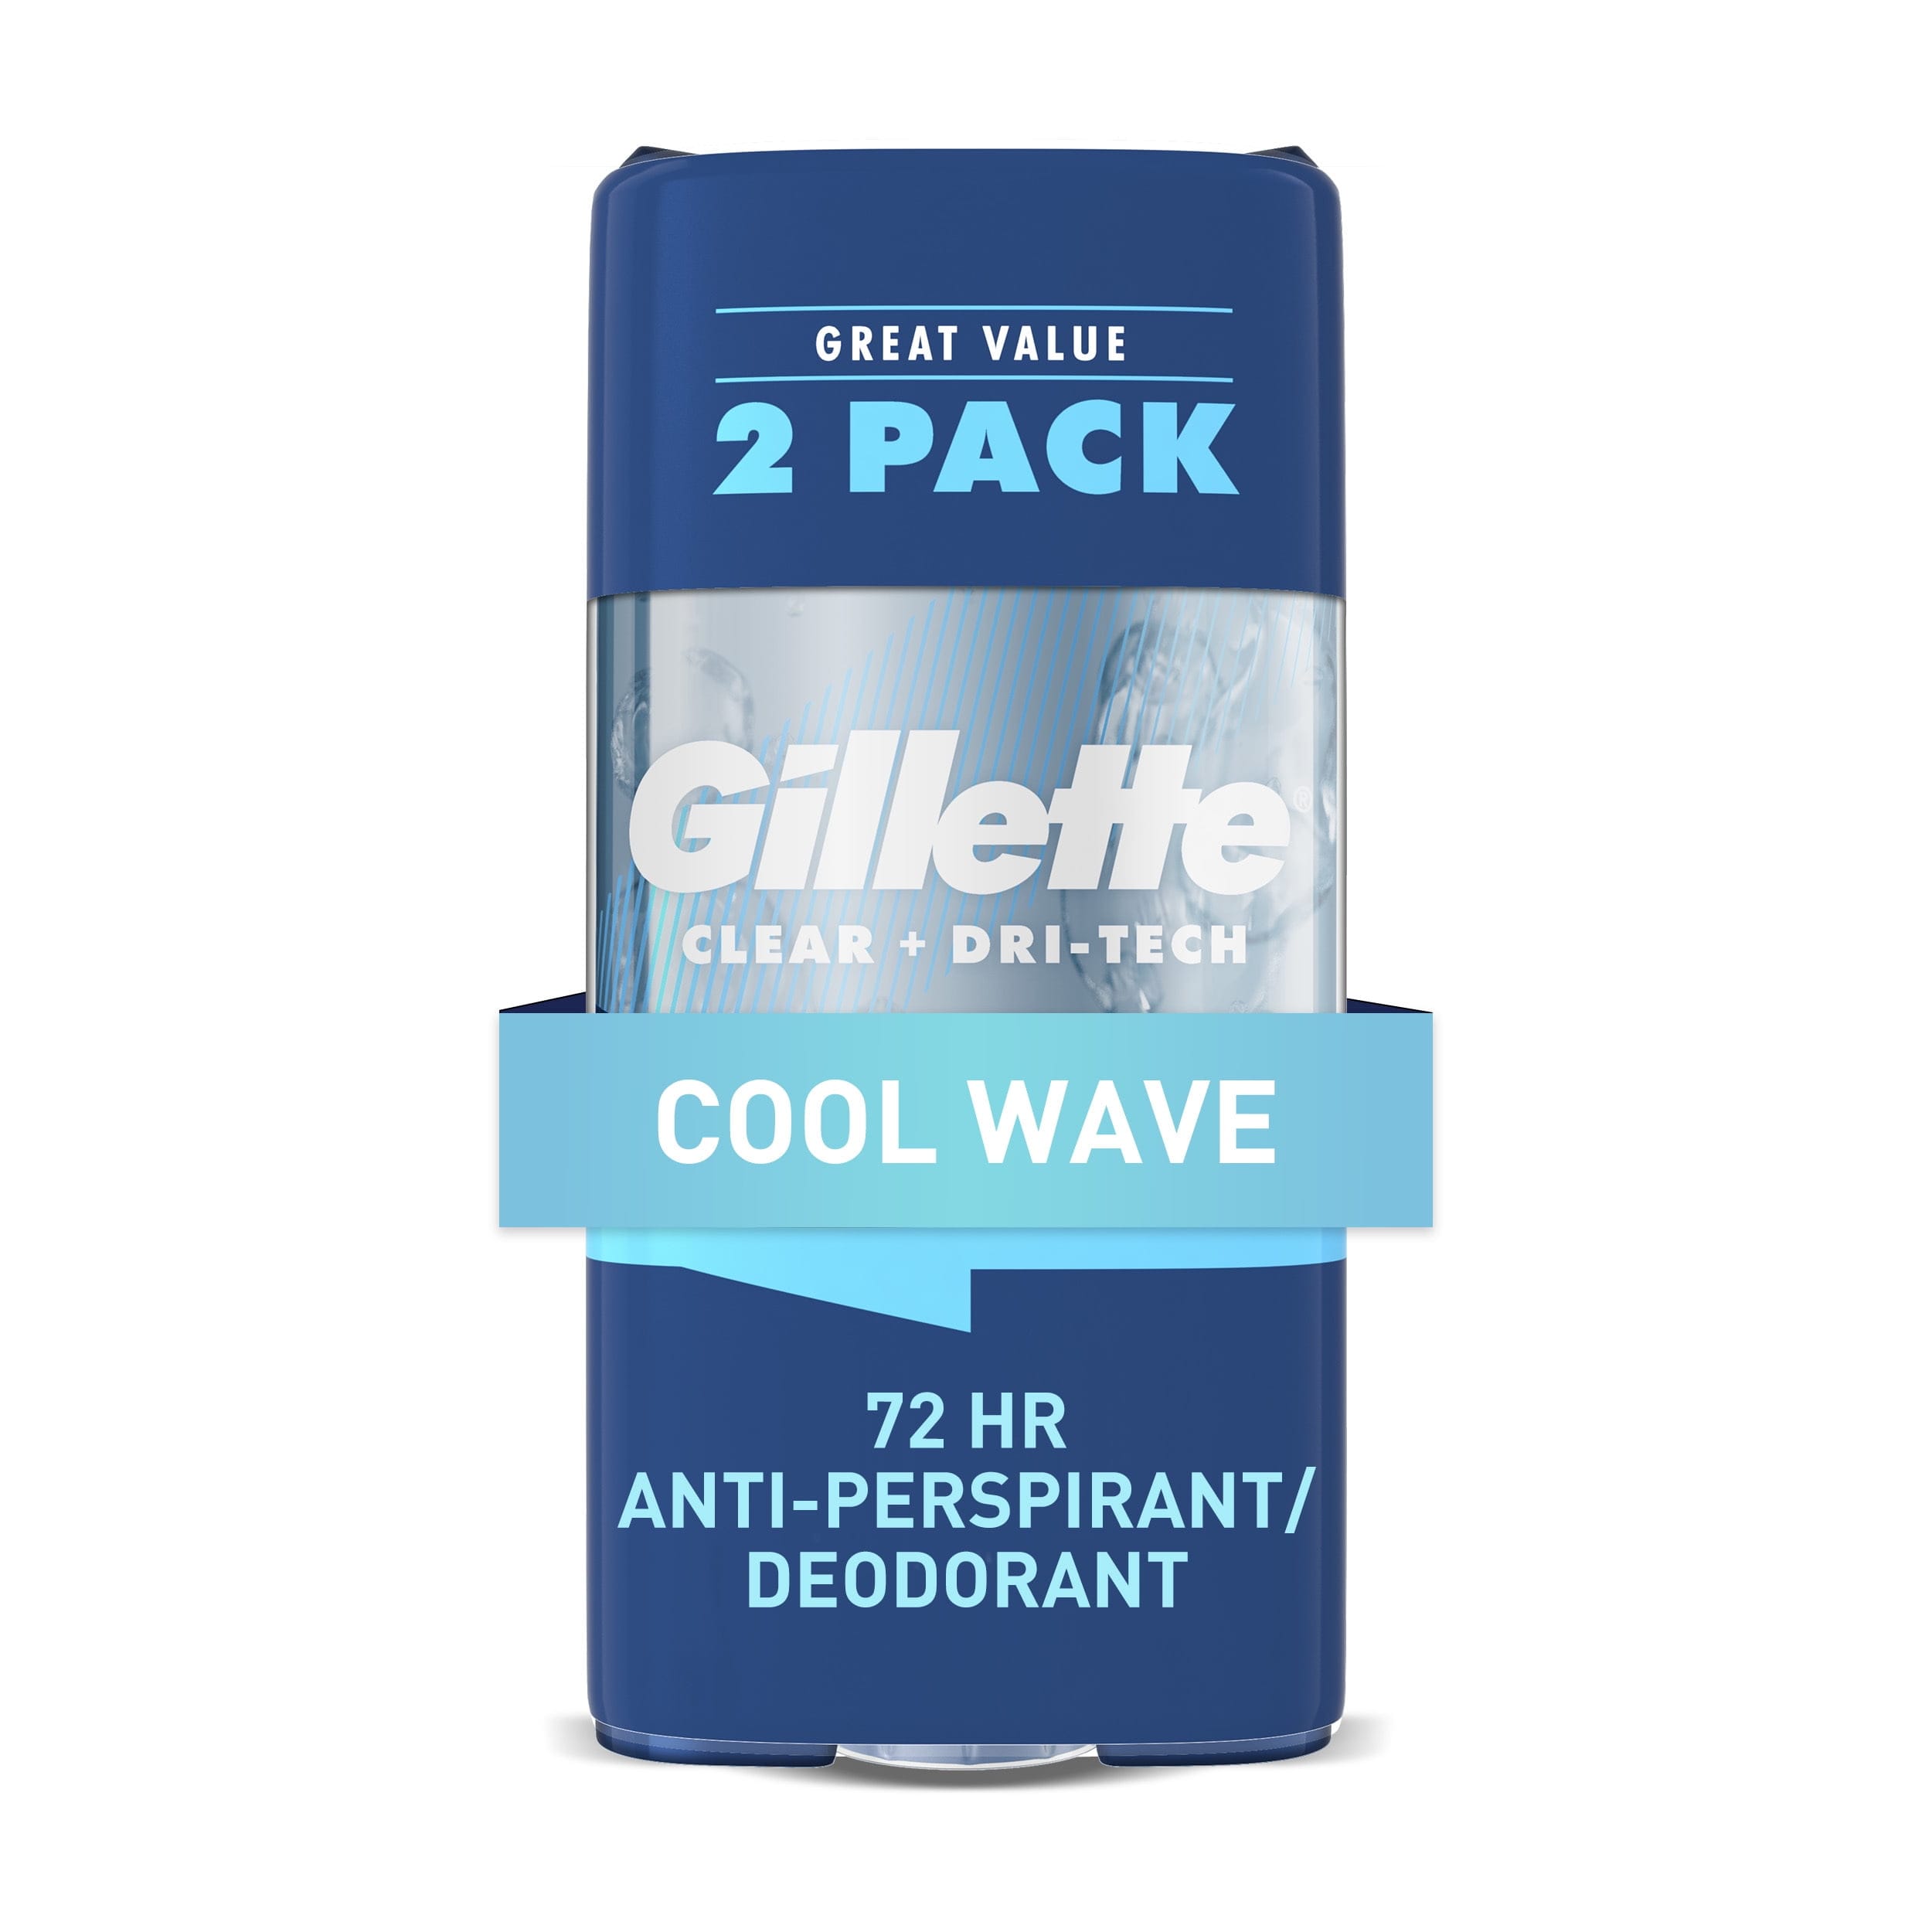 Gillette Antiperspirant and Deodorant for Men, Clear Gel, Cool